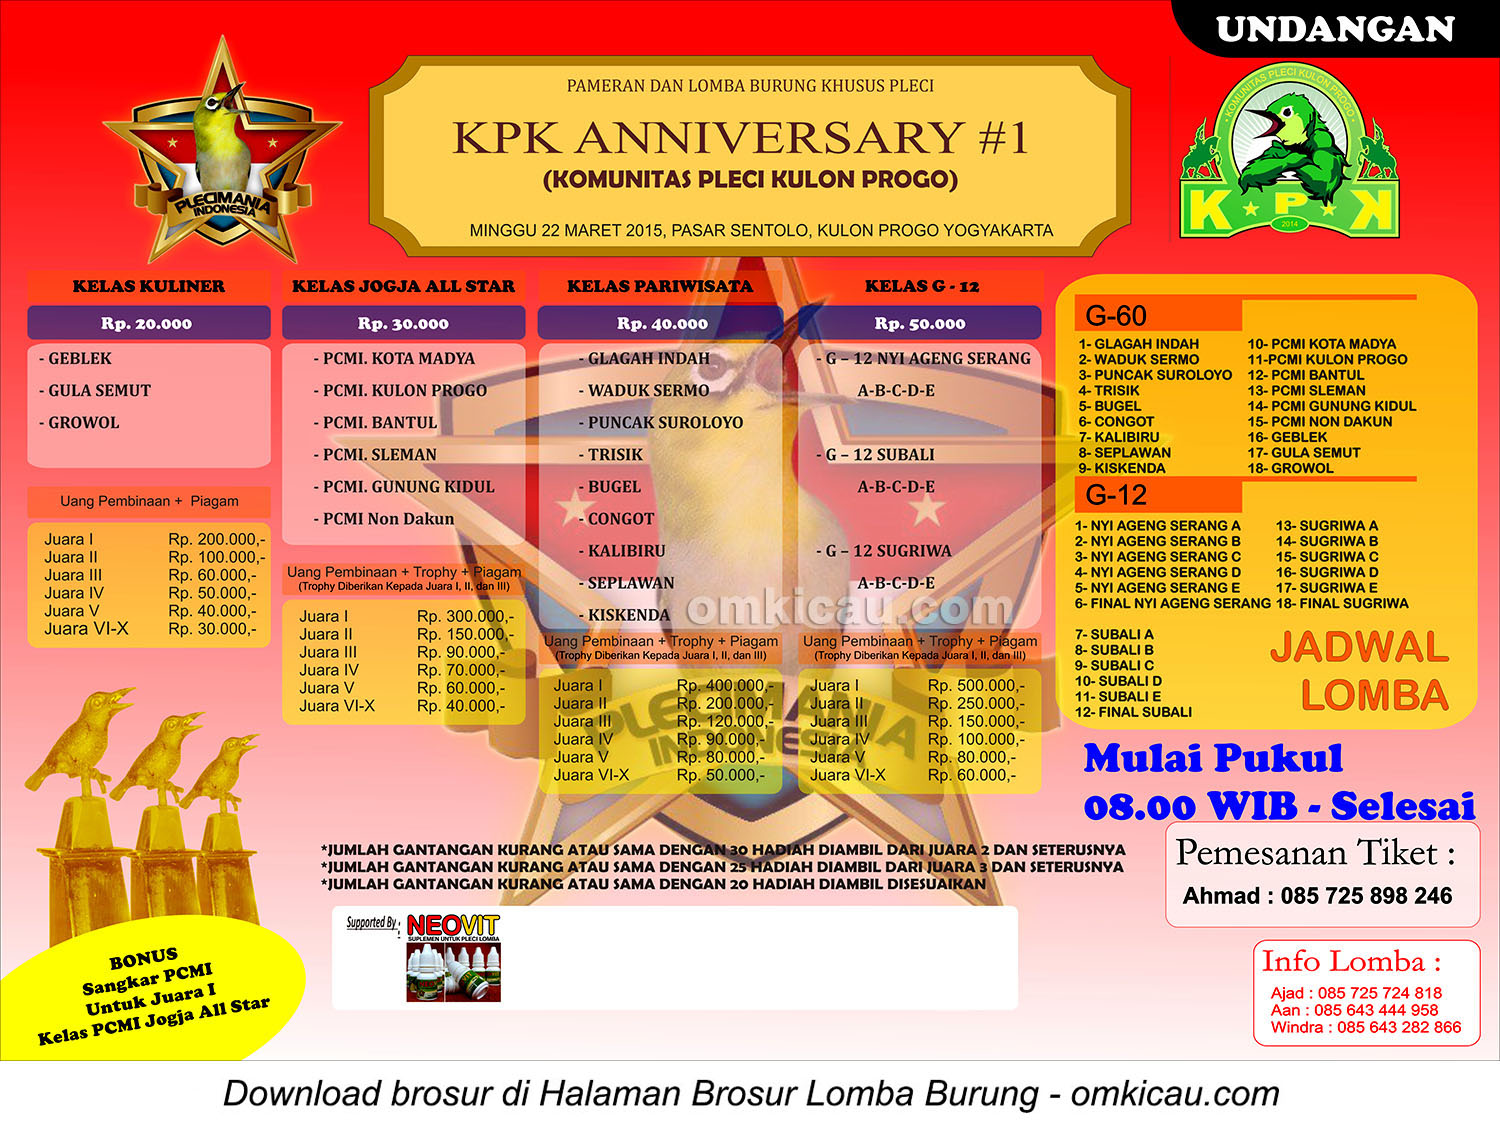 Brosur lomba burung pleci KPK Anniversary #1, Kulonprogo, 22 Maret 2015